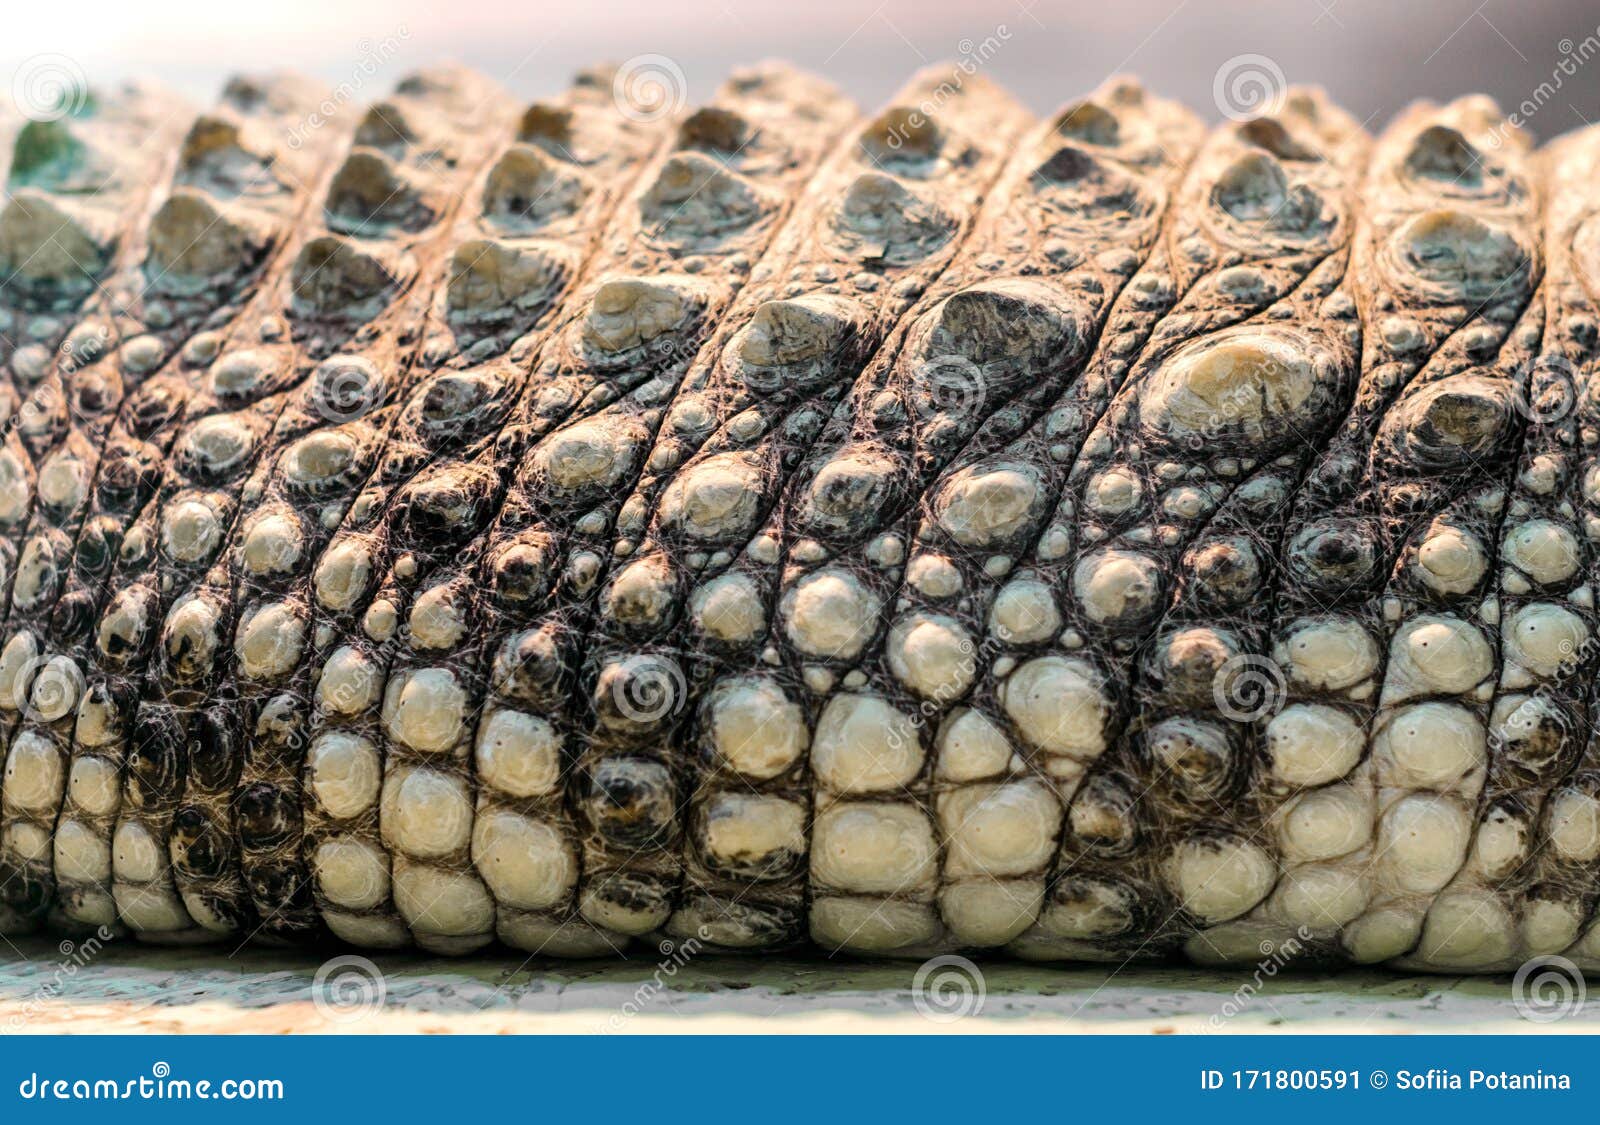 Alligator Crocodile Skin in Detail Close Up Stock Image - Image of